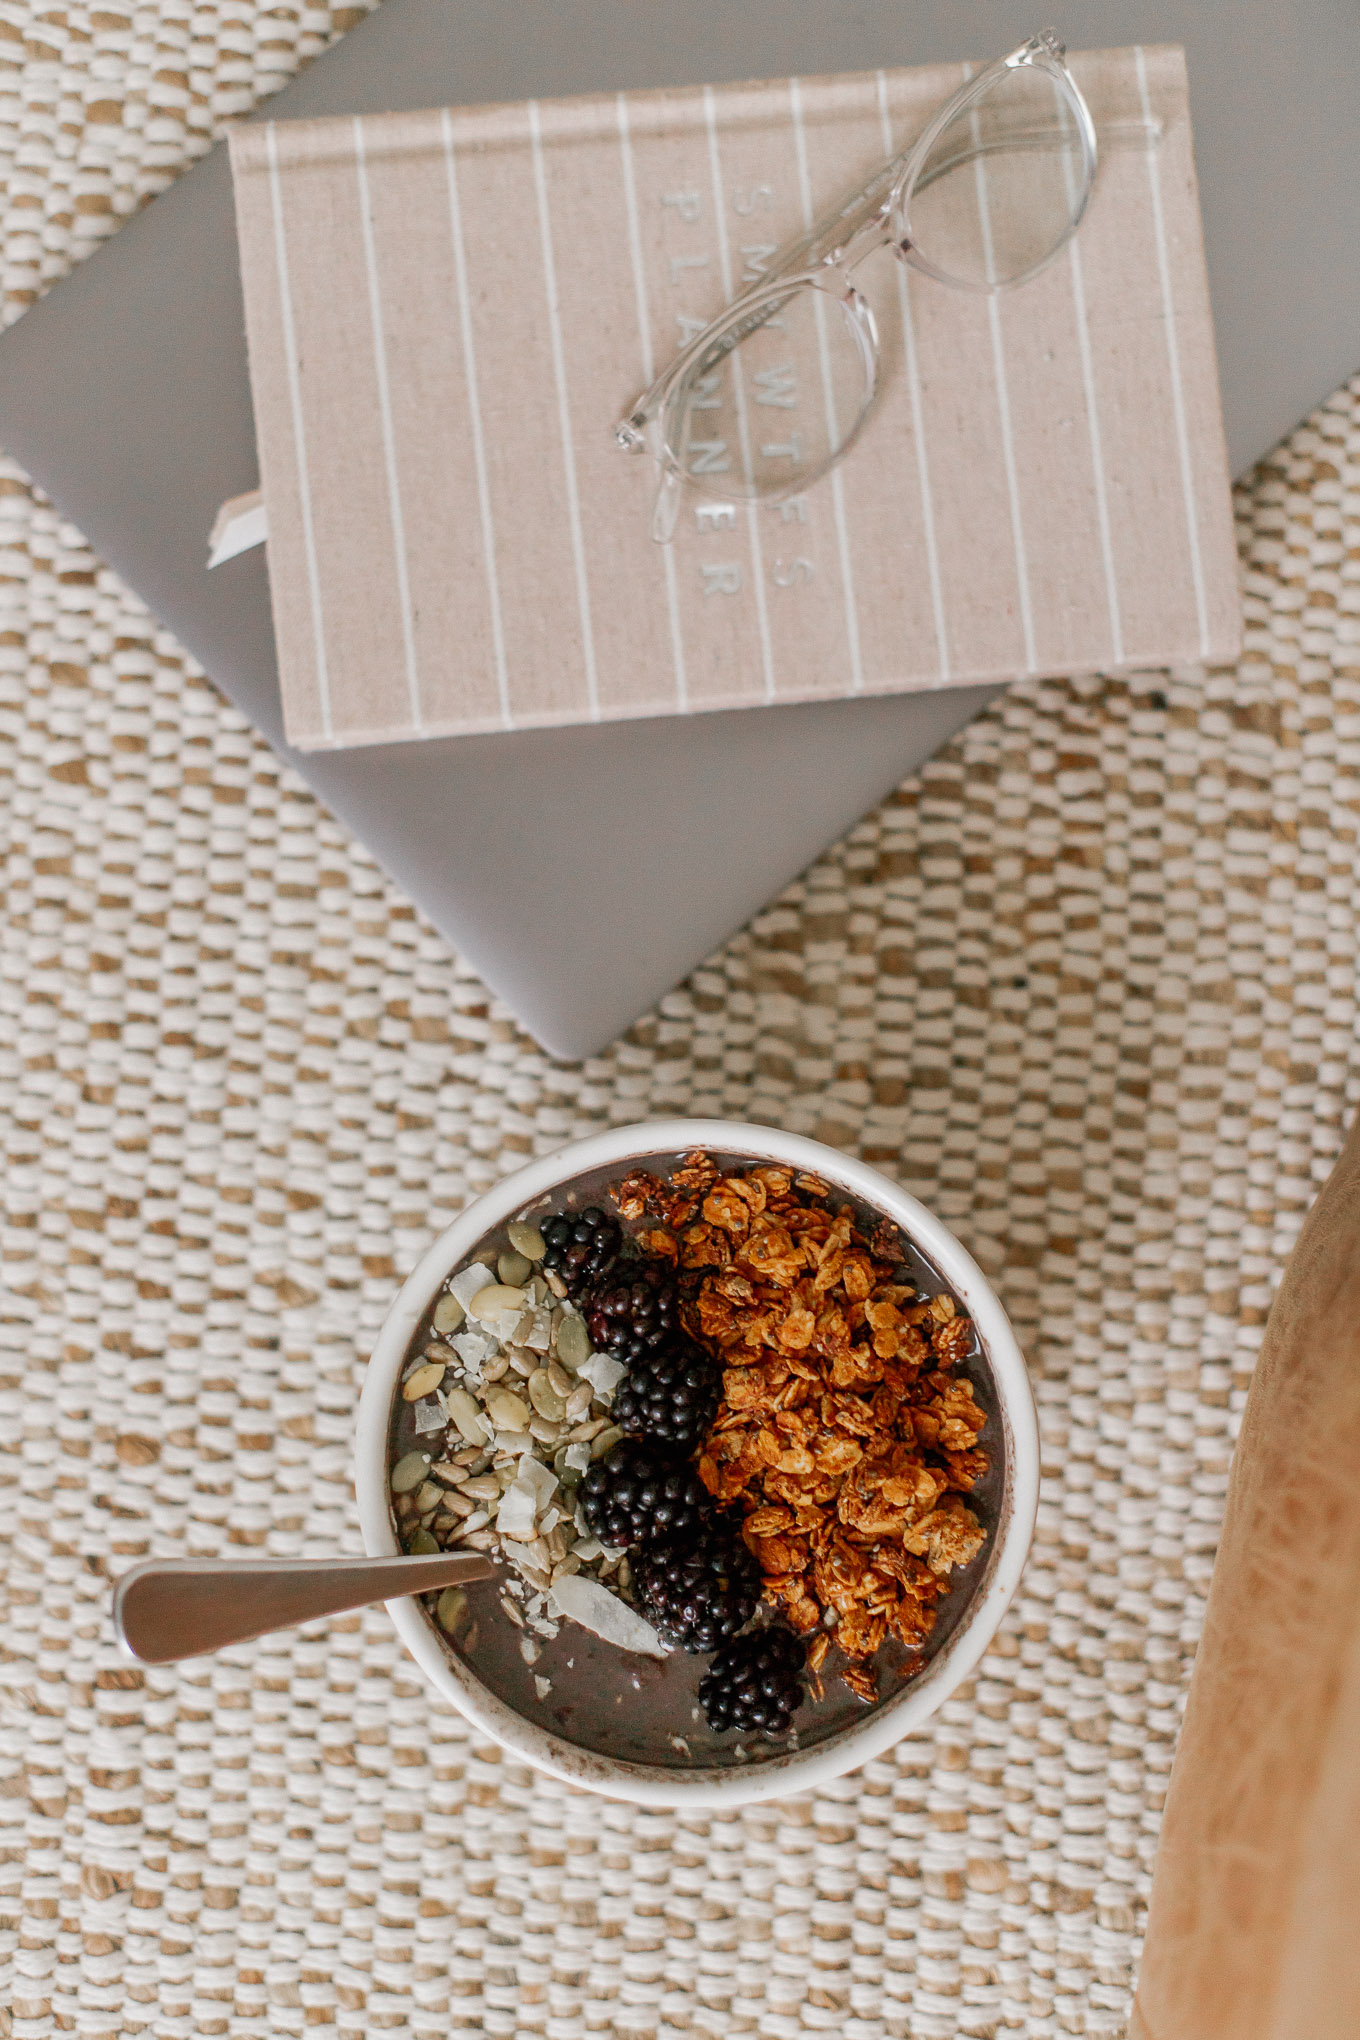 Easy Acai Bowl Recipe to Make at Home | Louella Reese